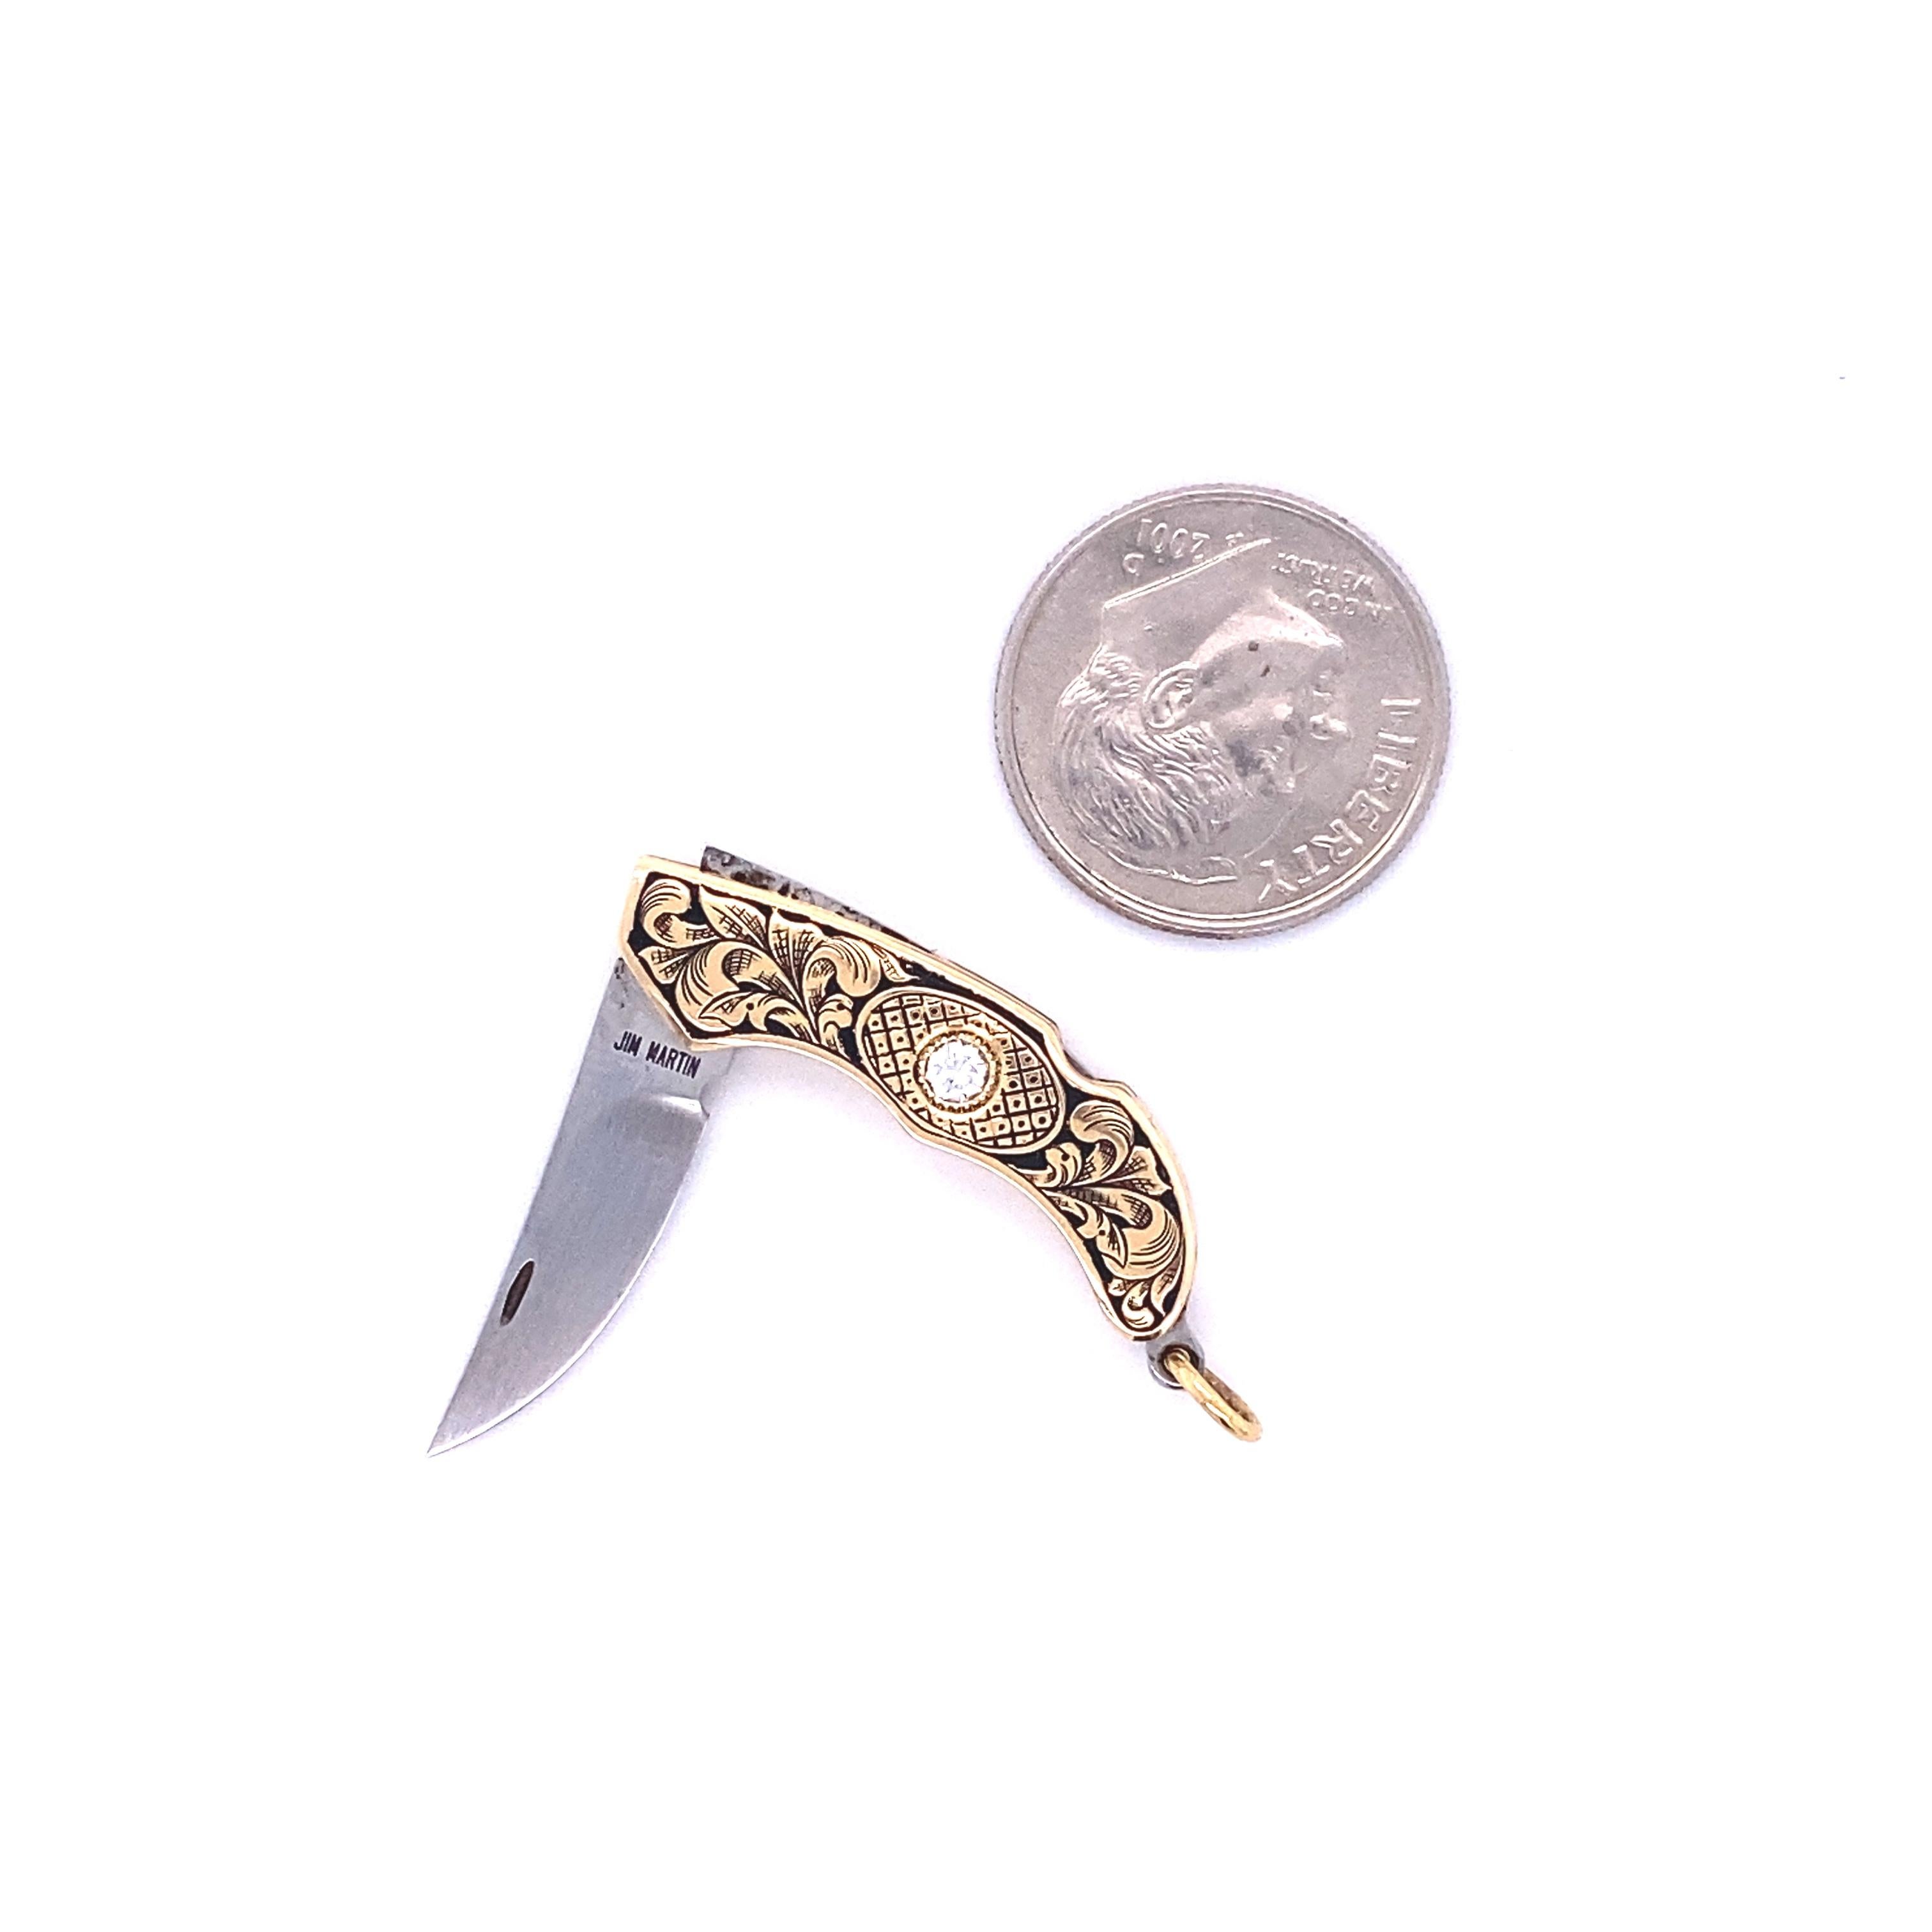 Rare Jim Martin Miniature 14K Gold Miniature Knife Necklace Pendant with Diamond 4